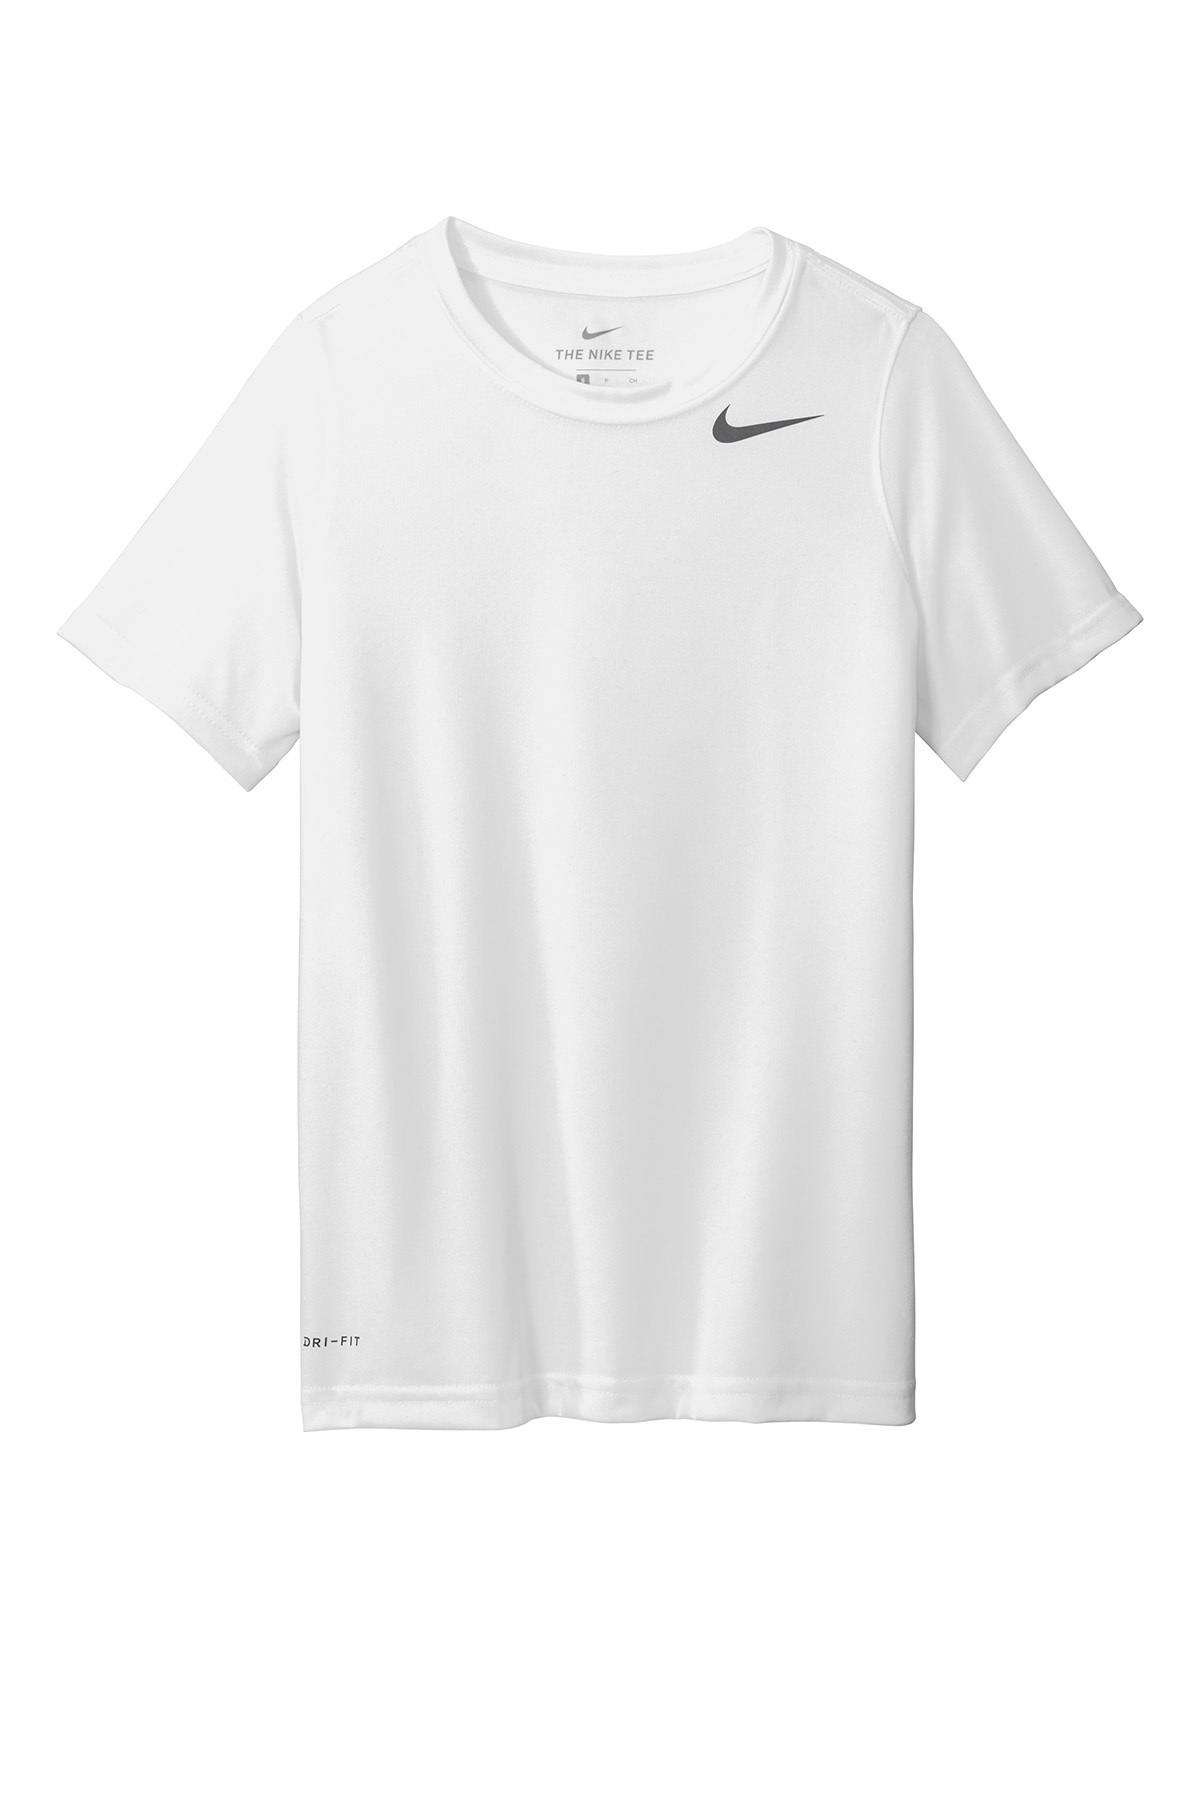 Nike Youth Legend Tee | Product | SanMar